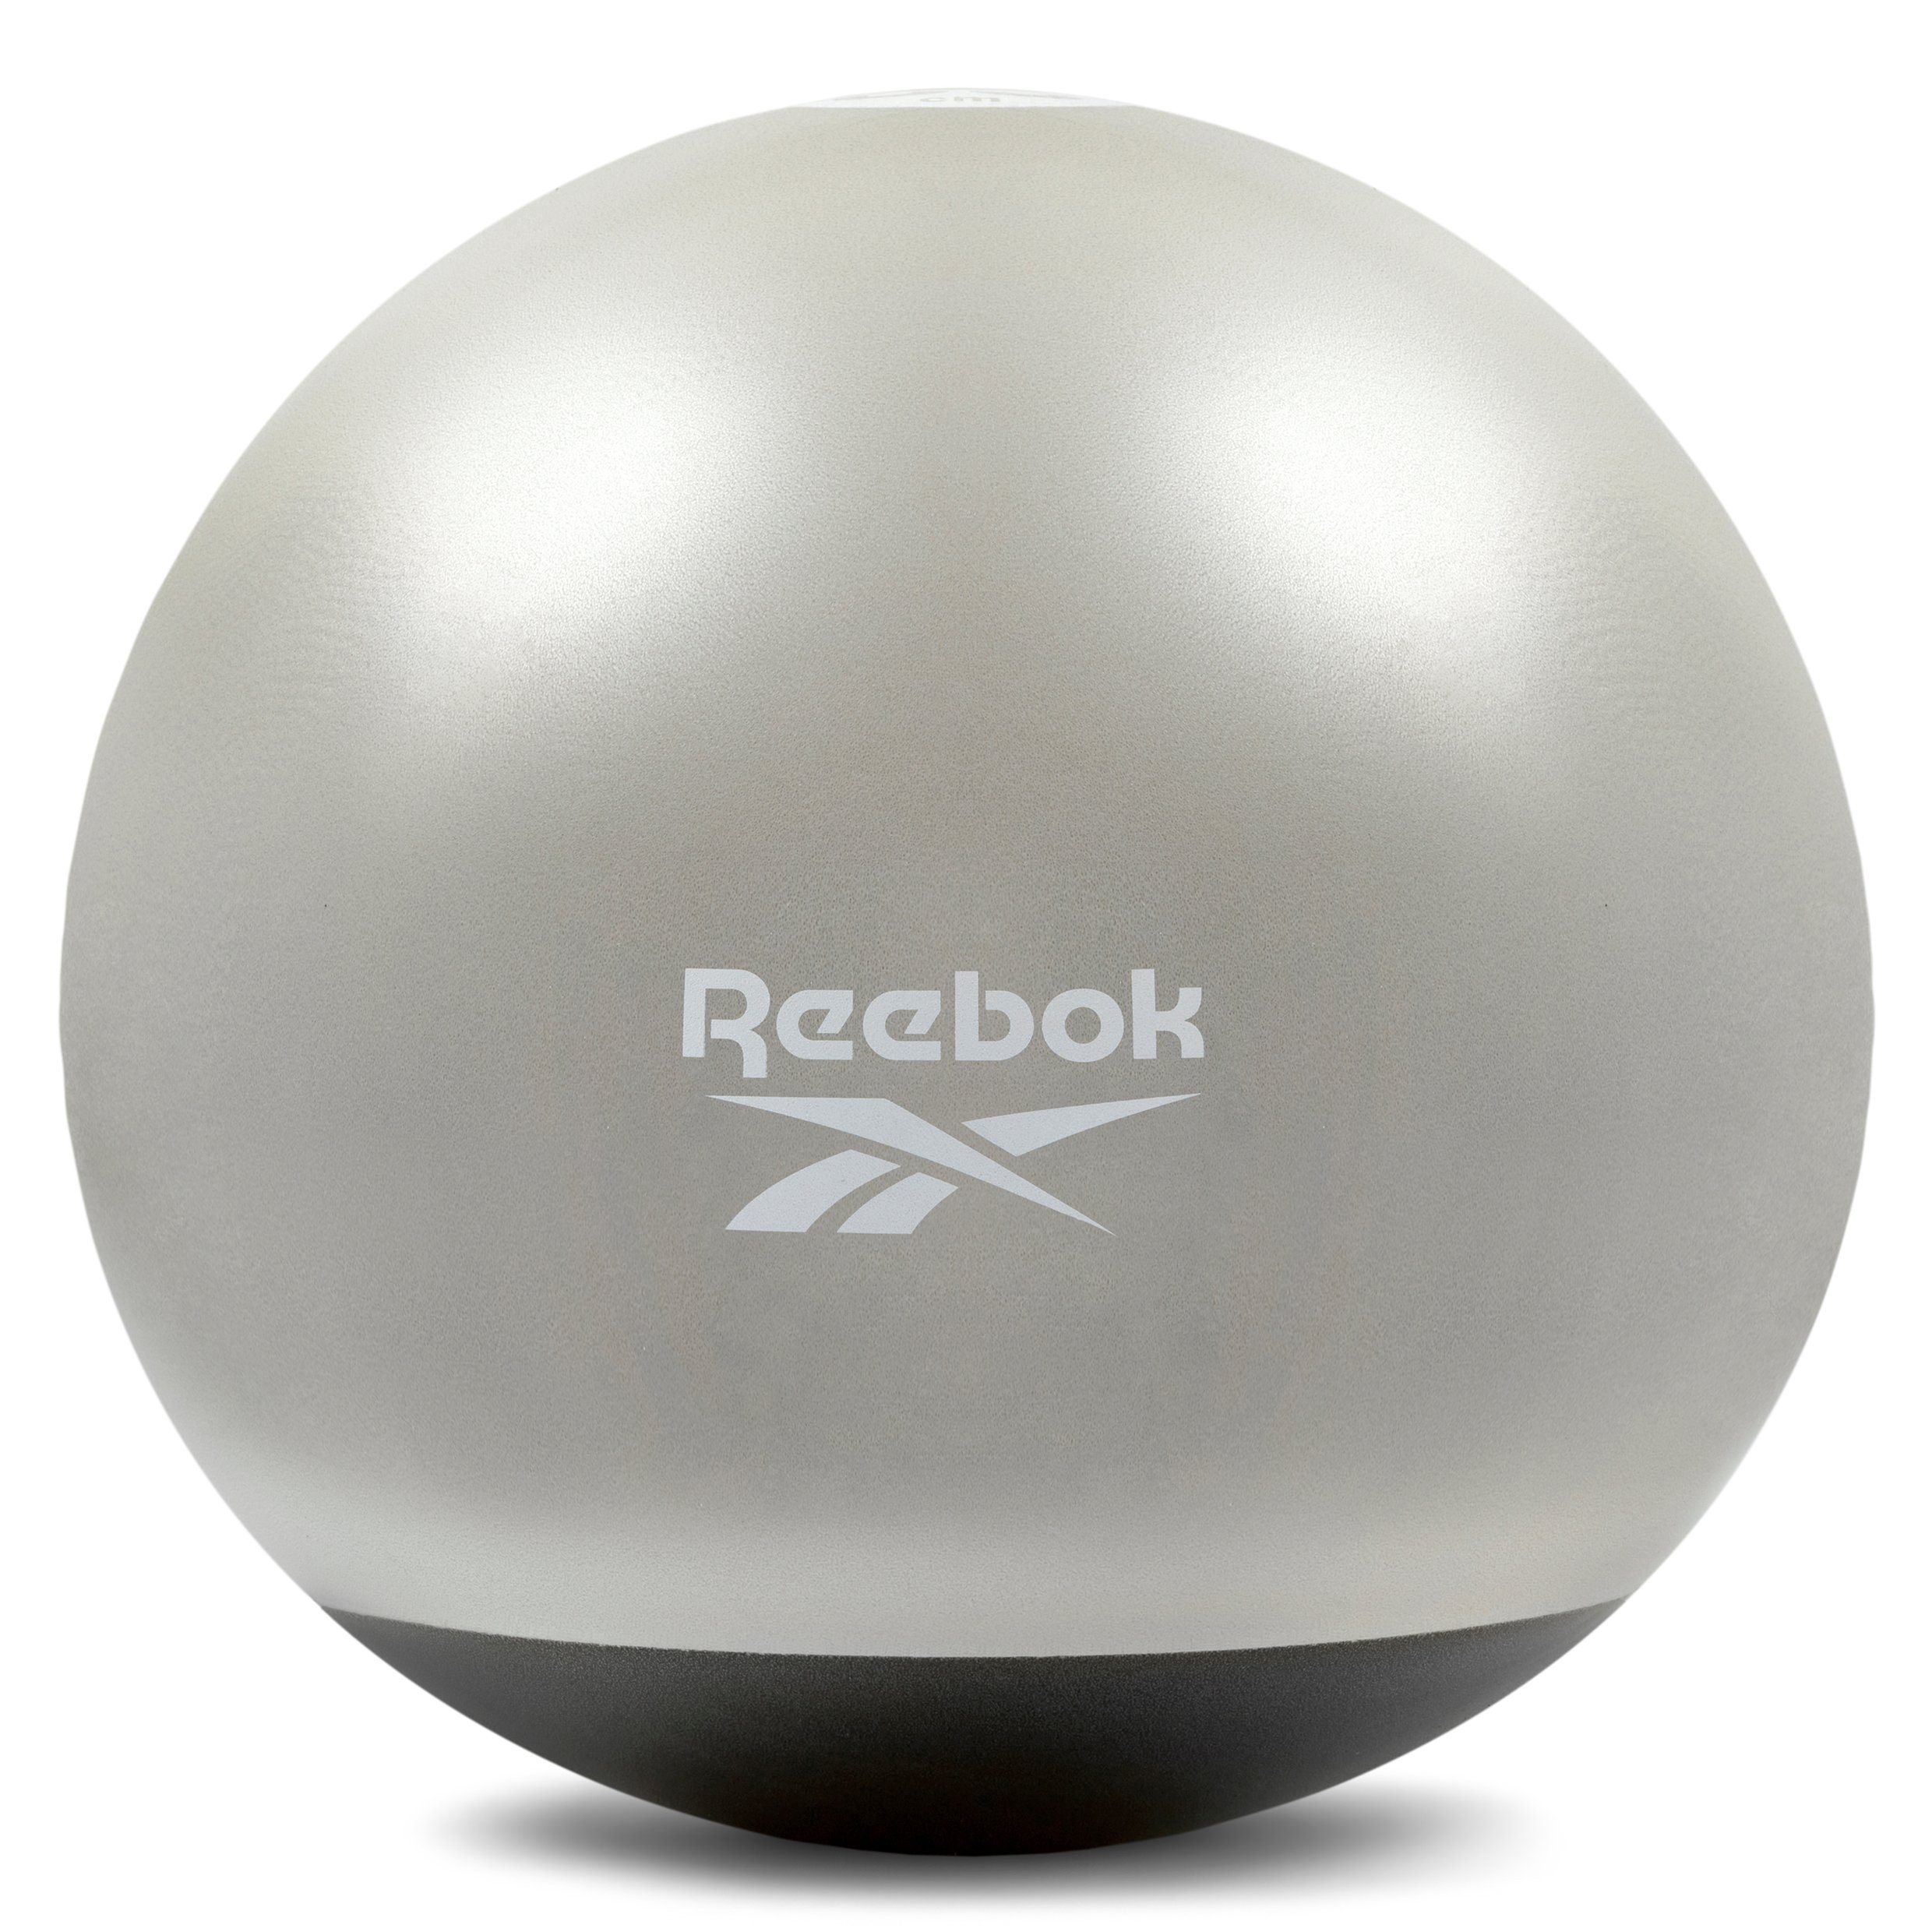 Reebok Gymnastikball Reebok Stabilitäts-Gymball Grau/Schwarz, Ø 75 cm, beschwerten Basis, um Stabilität zu fördern & Wegrollen zu verhindern